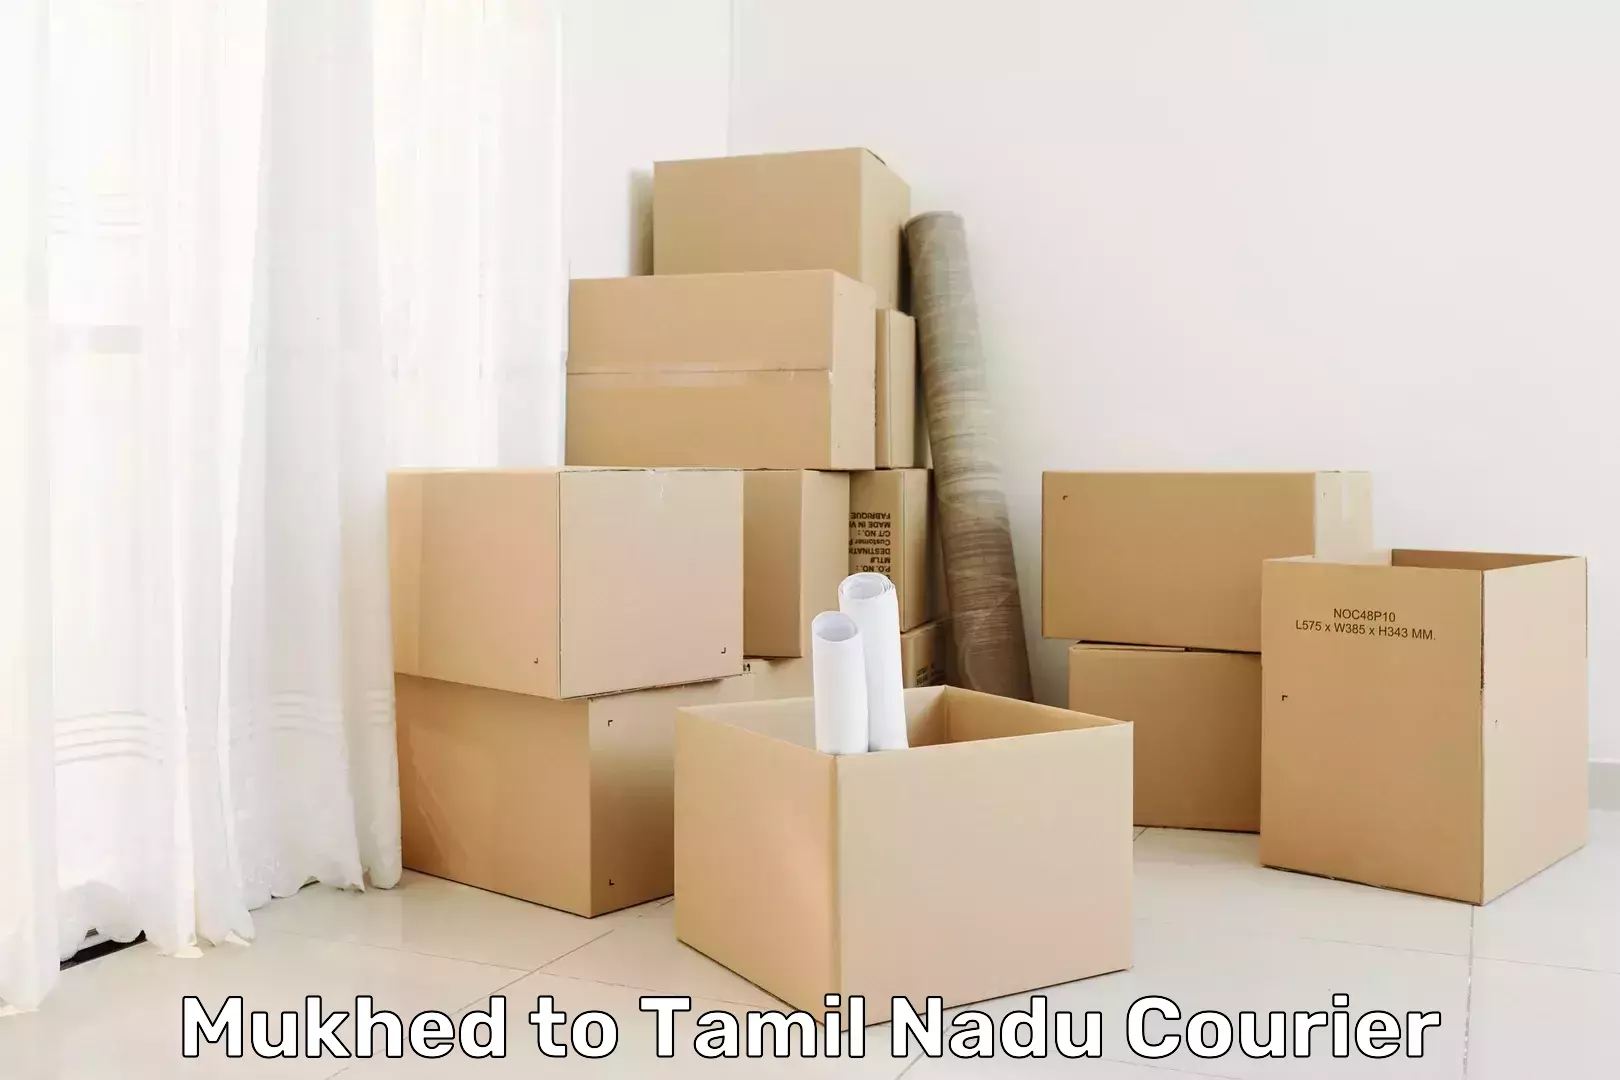 Courier service comparison Mukhed to Tamil Nadu